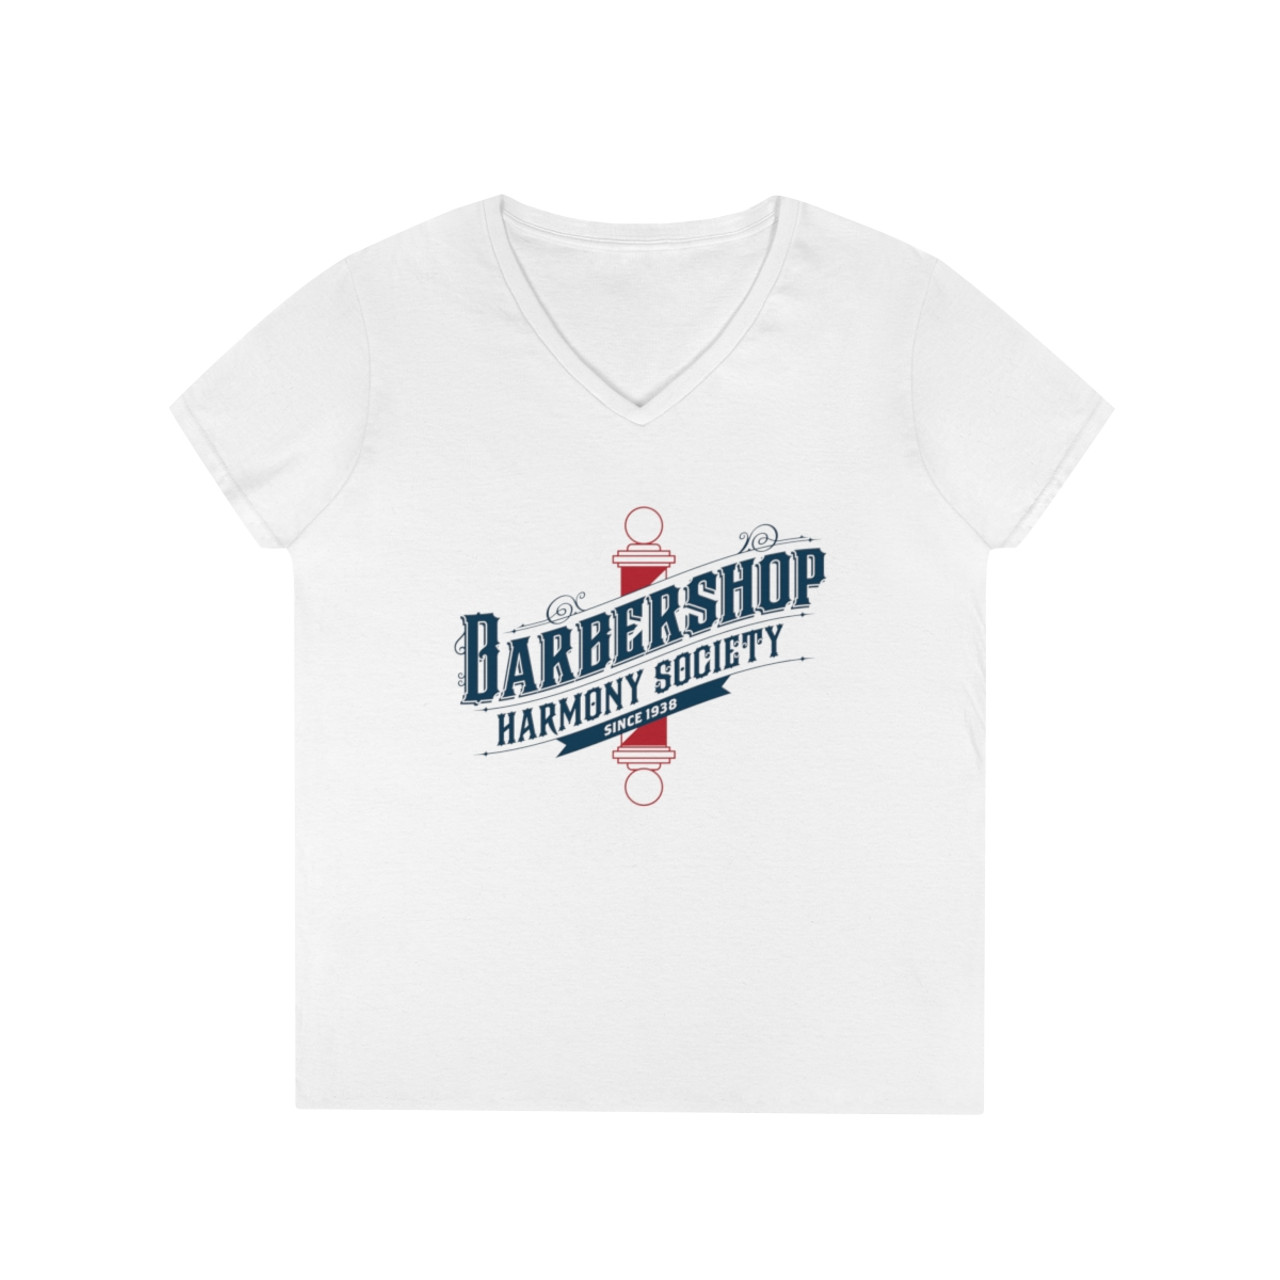 Women's V-Neck "Old School Barberpole" Barbershop Harmony T-Shirt- White